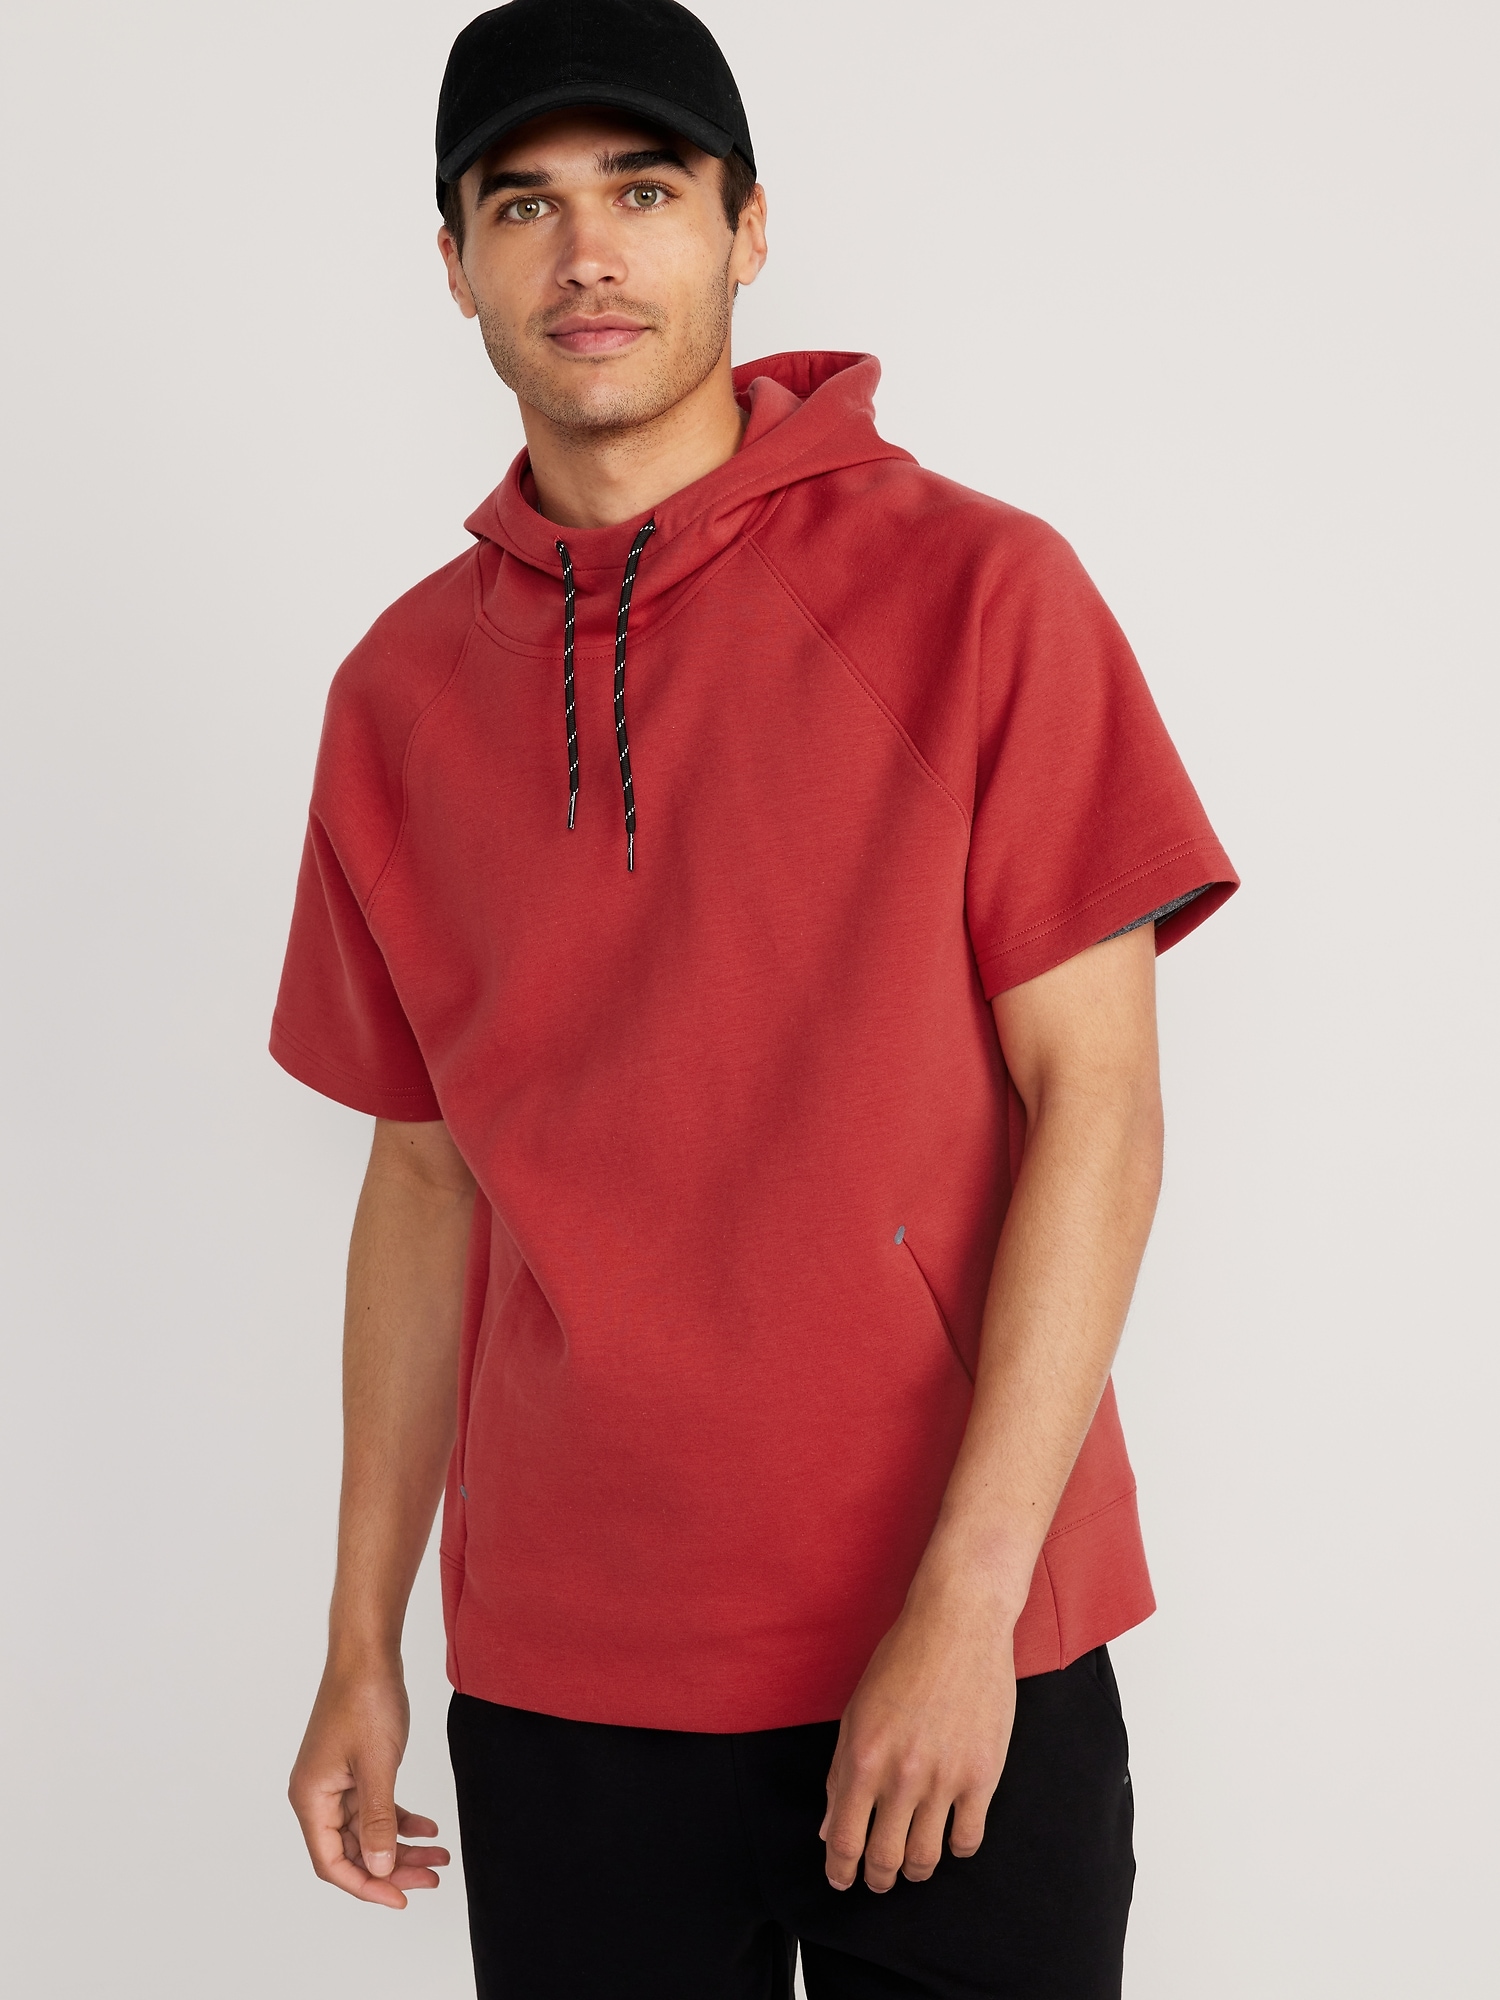 Old Navy Dynamic Fleece Short-Sleeve Pullover Hoodie for Men red. 1